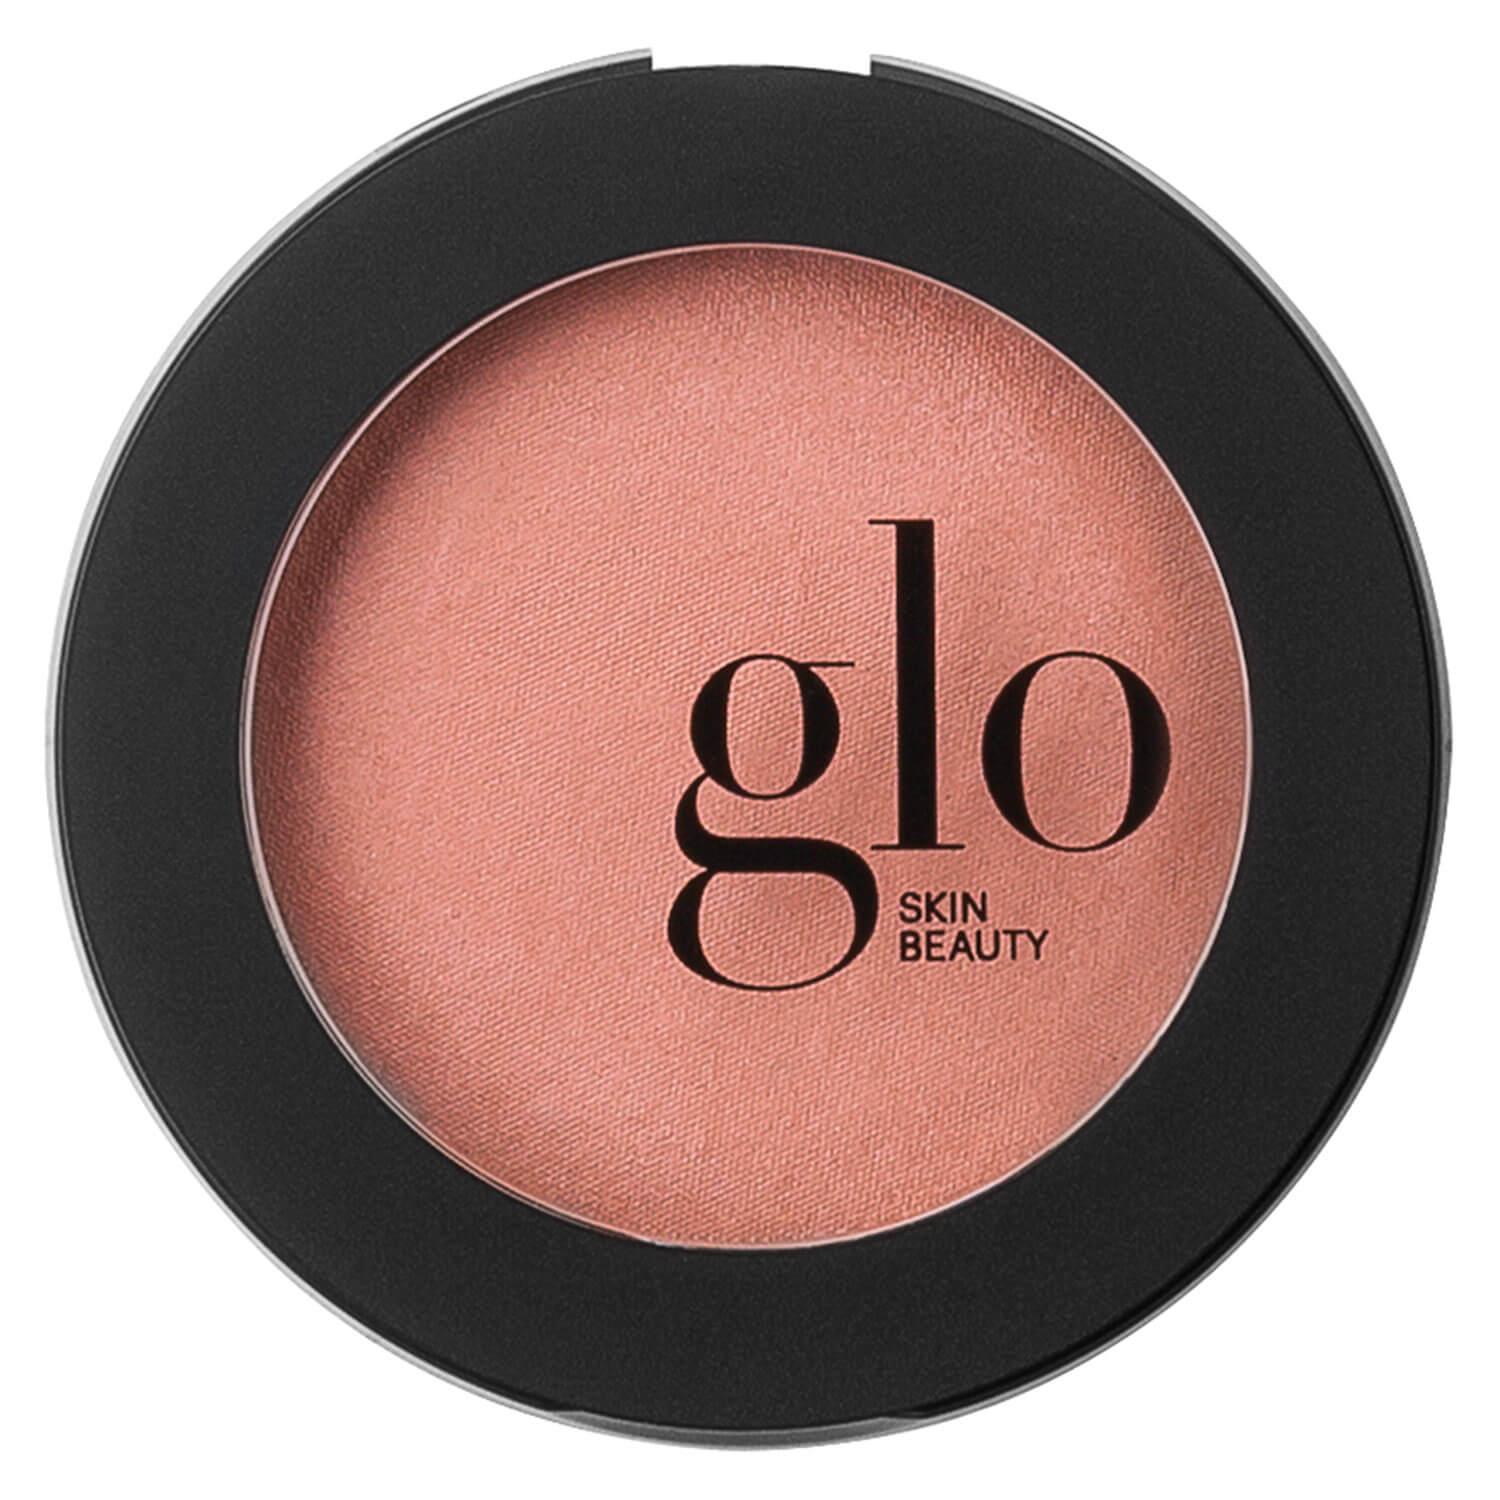 Glo Skin Beauty Blush - Blush Sweet